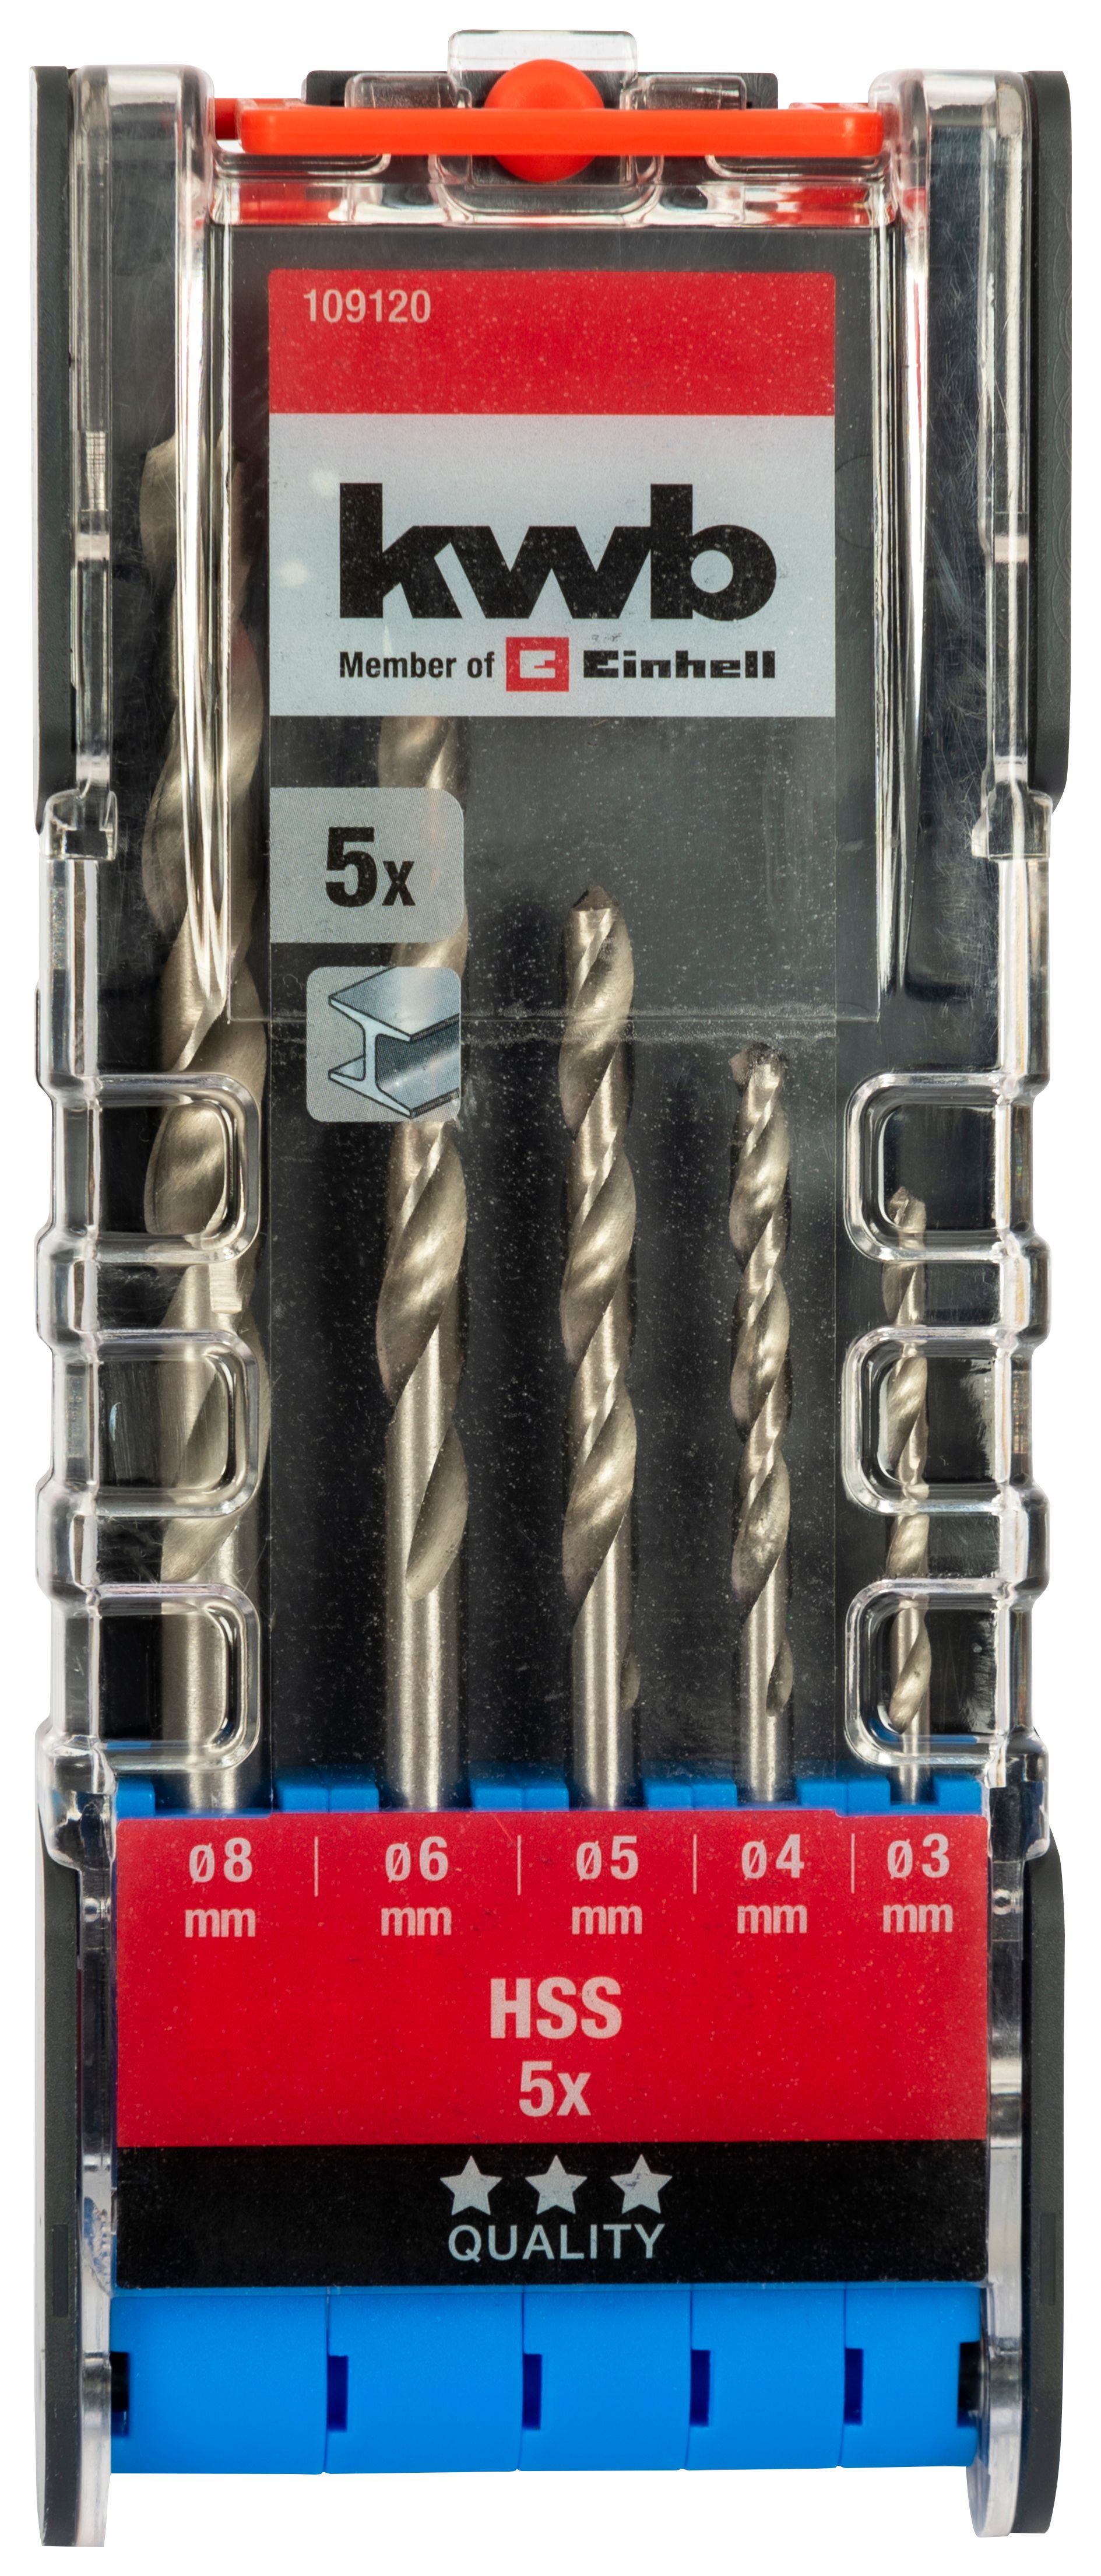 Image of Einhell Kwb HSS Metal Drill Bit Set - 5 Pack